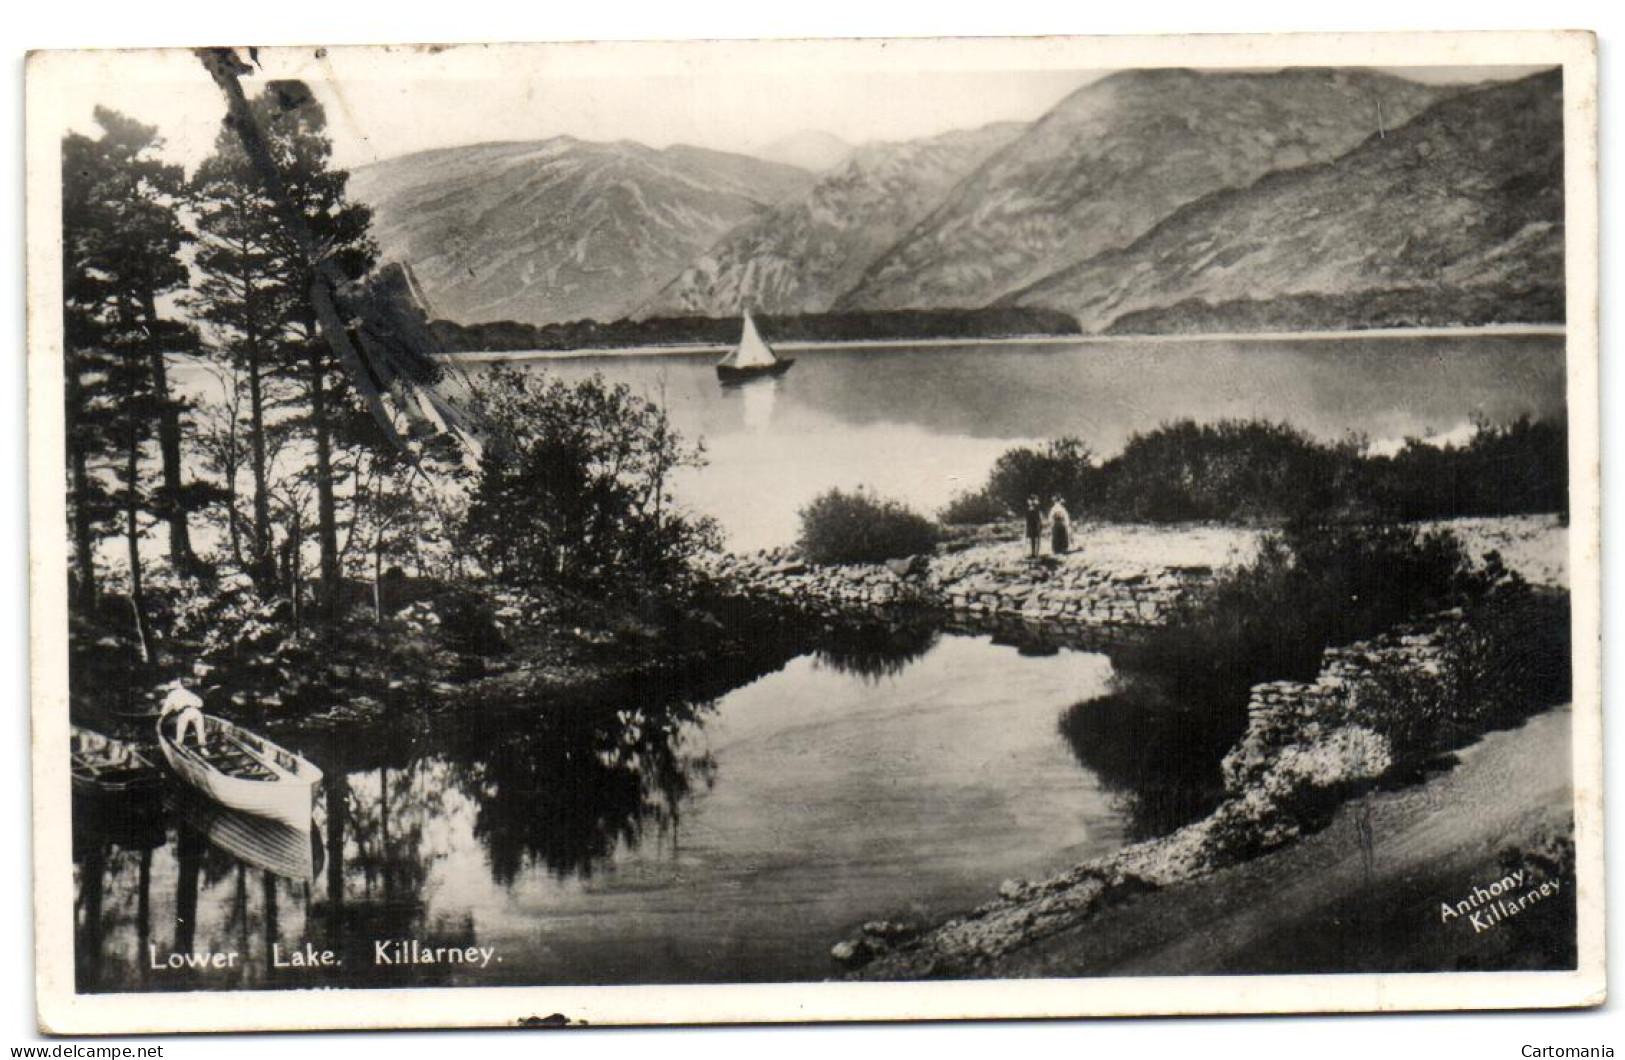 Lower Lake - Killarney - Kerry